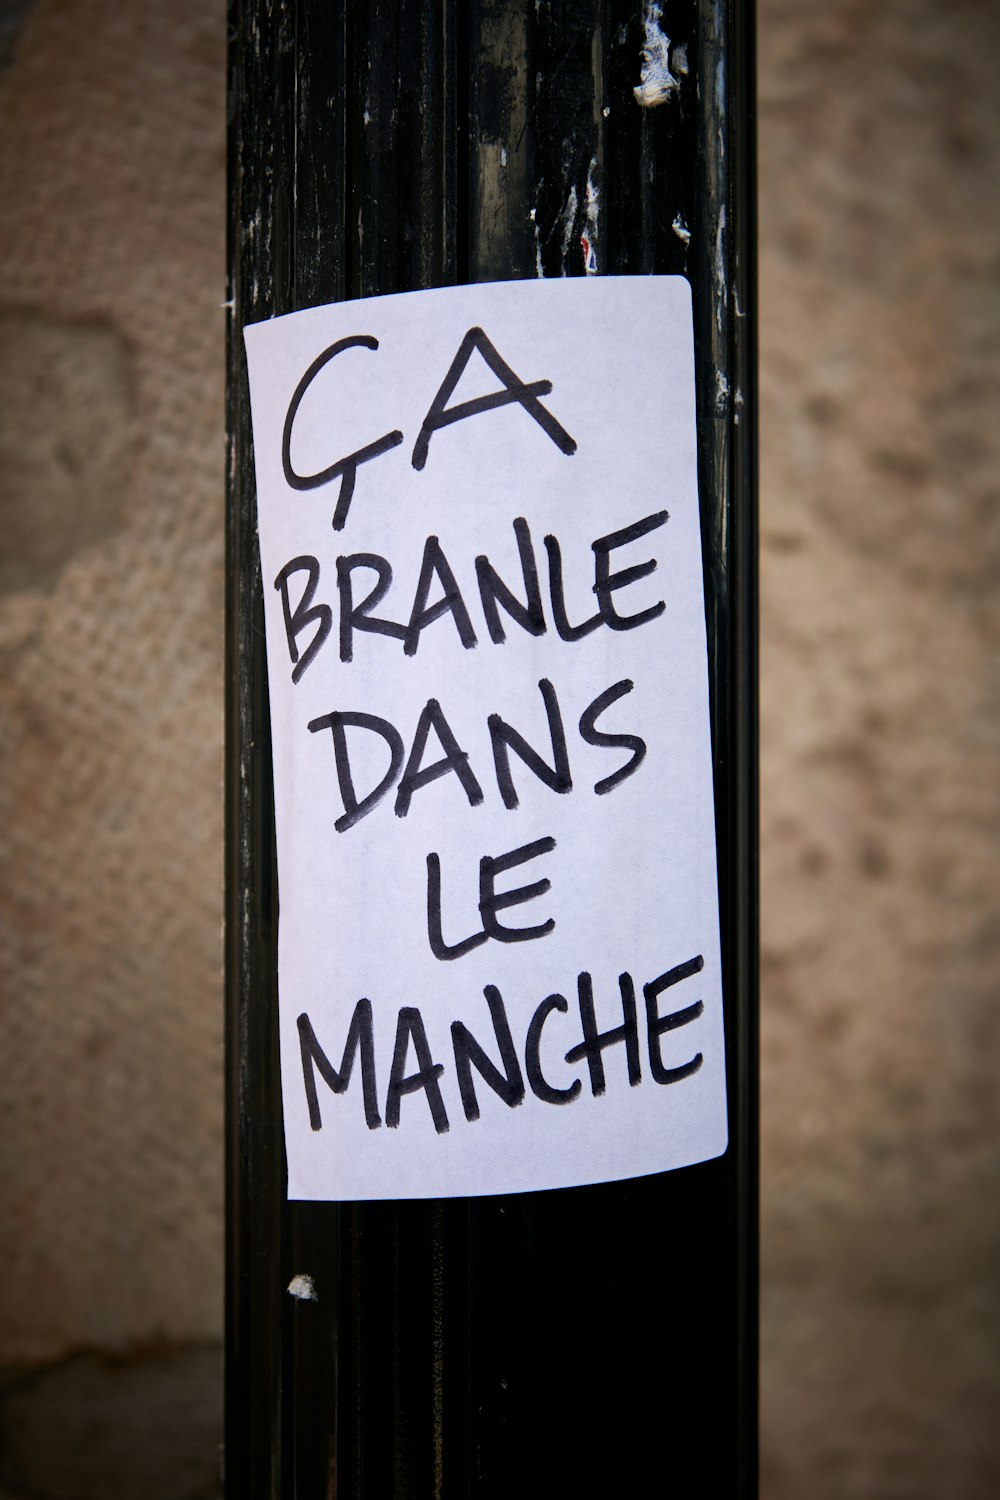 a sign on a pole that says ga brane dan's le manche